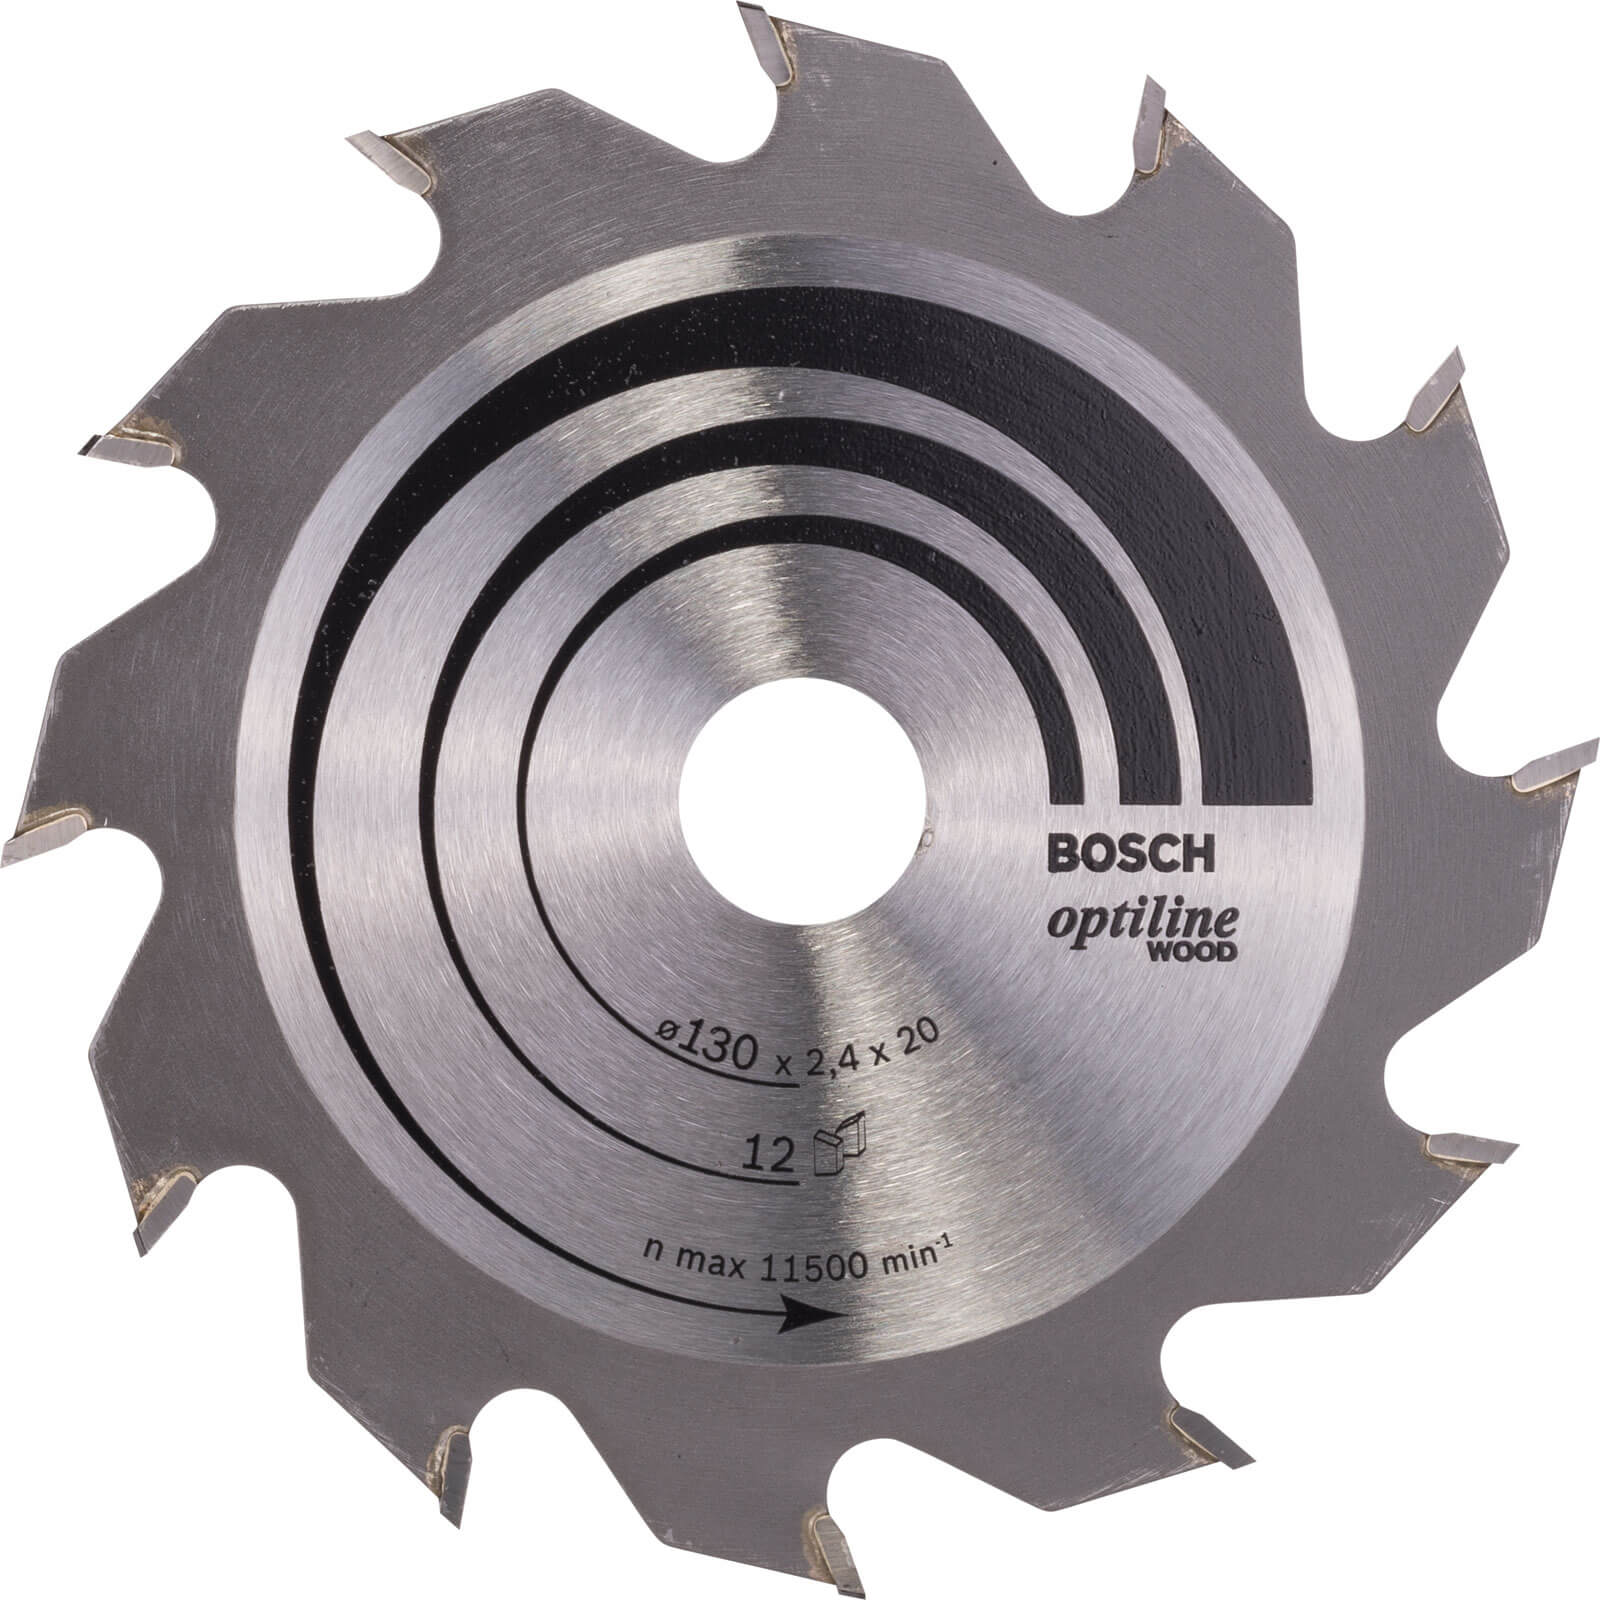 Photo of Bosch Optiline Wood Cutting Saw Blade 130mm 12t 20mm